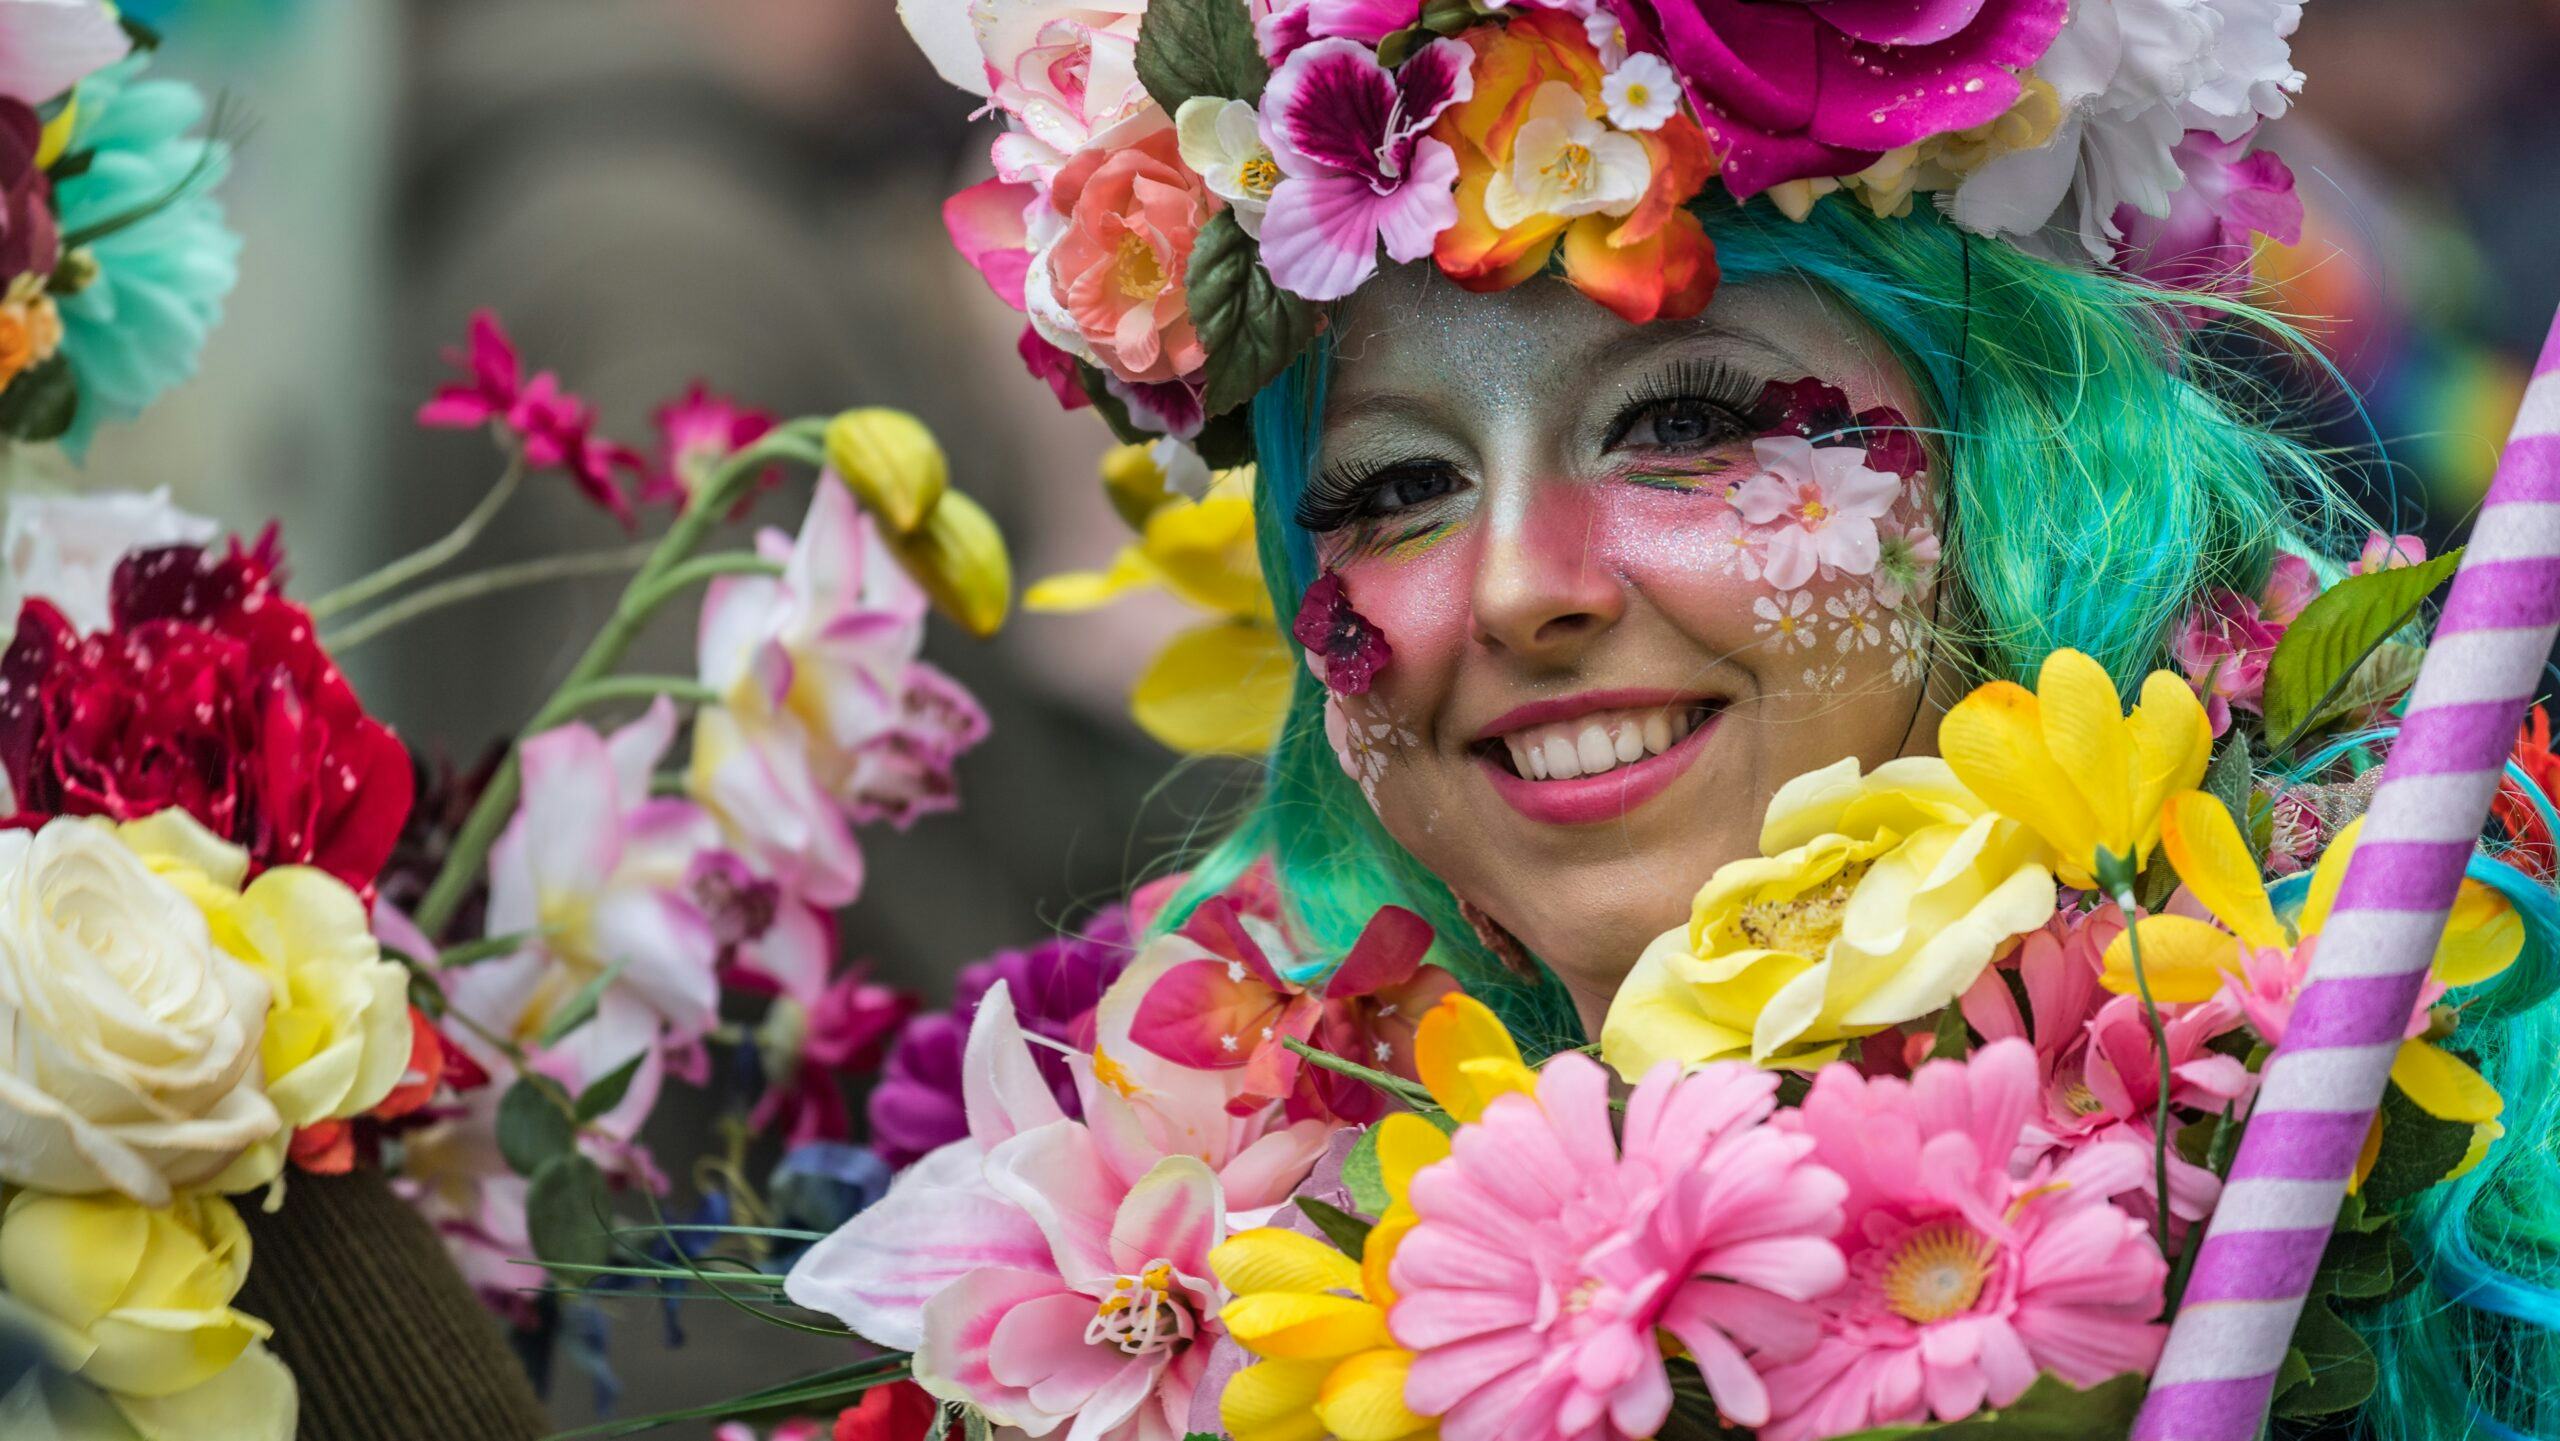 Hotelbezetting in Nederland piekt tijdens carnavalsweekend